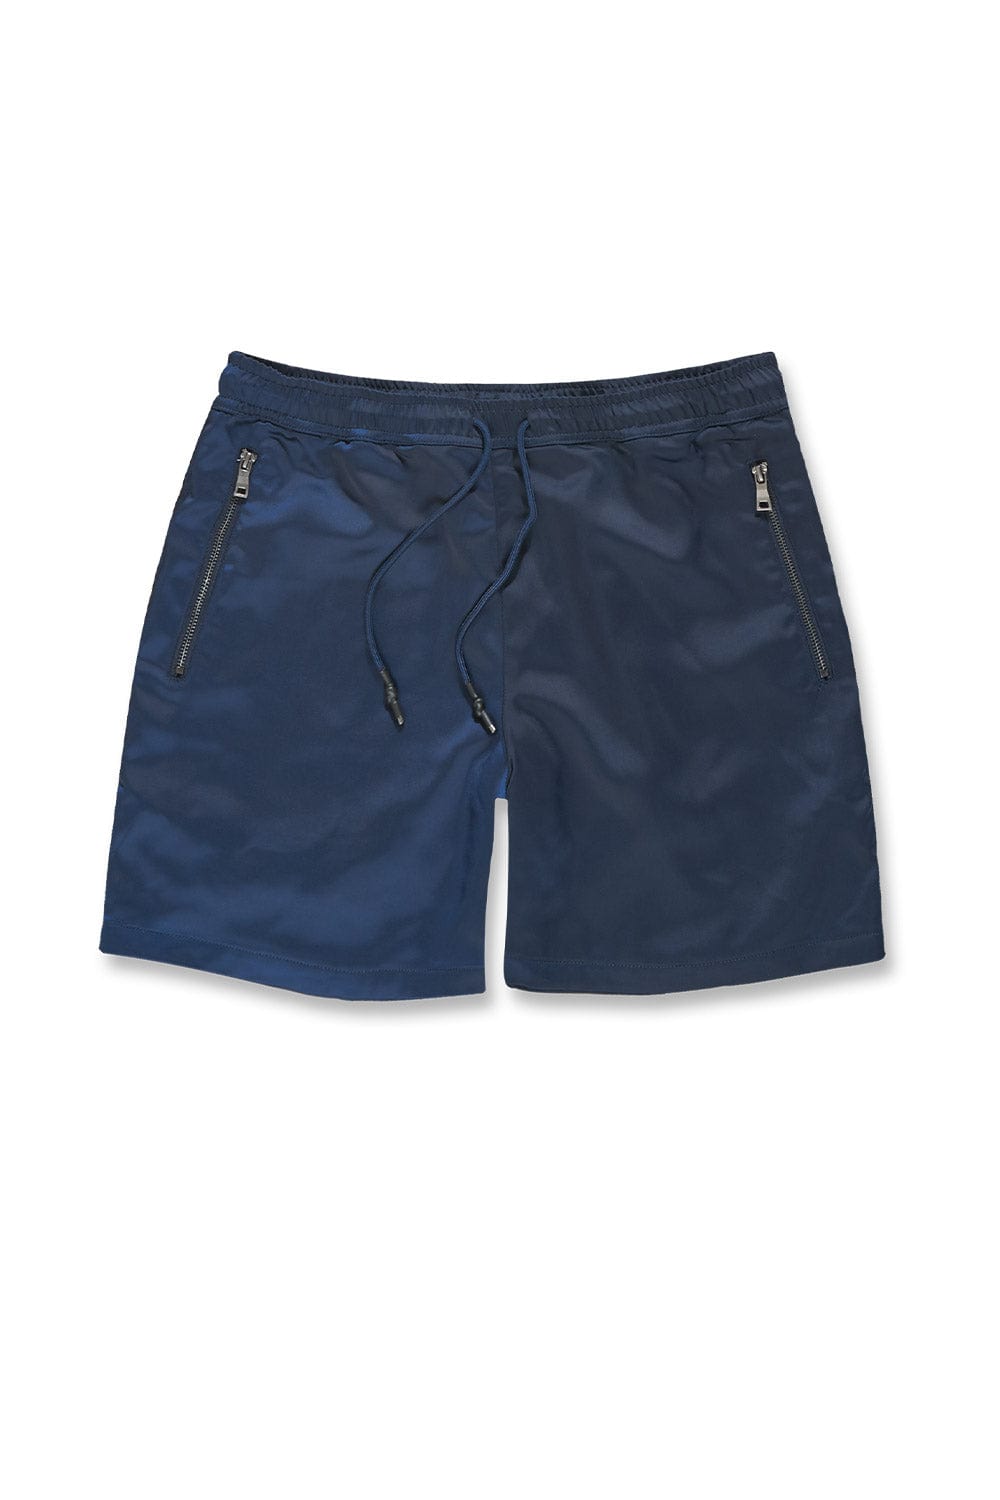 Jordan Craig Athletic - Lux Shorts Navy / S